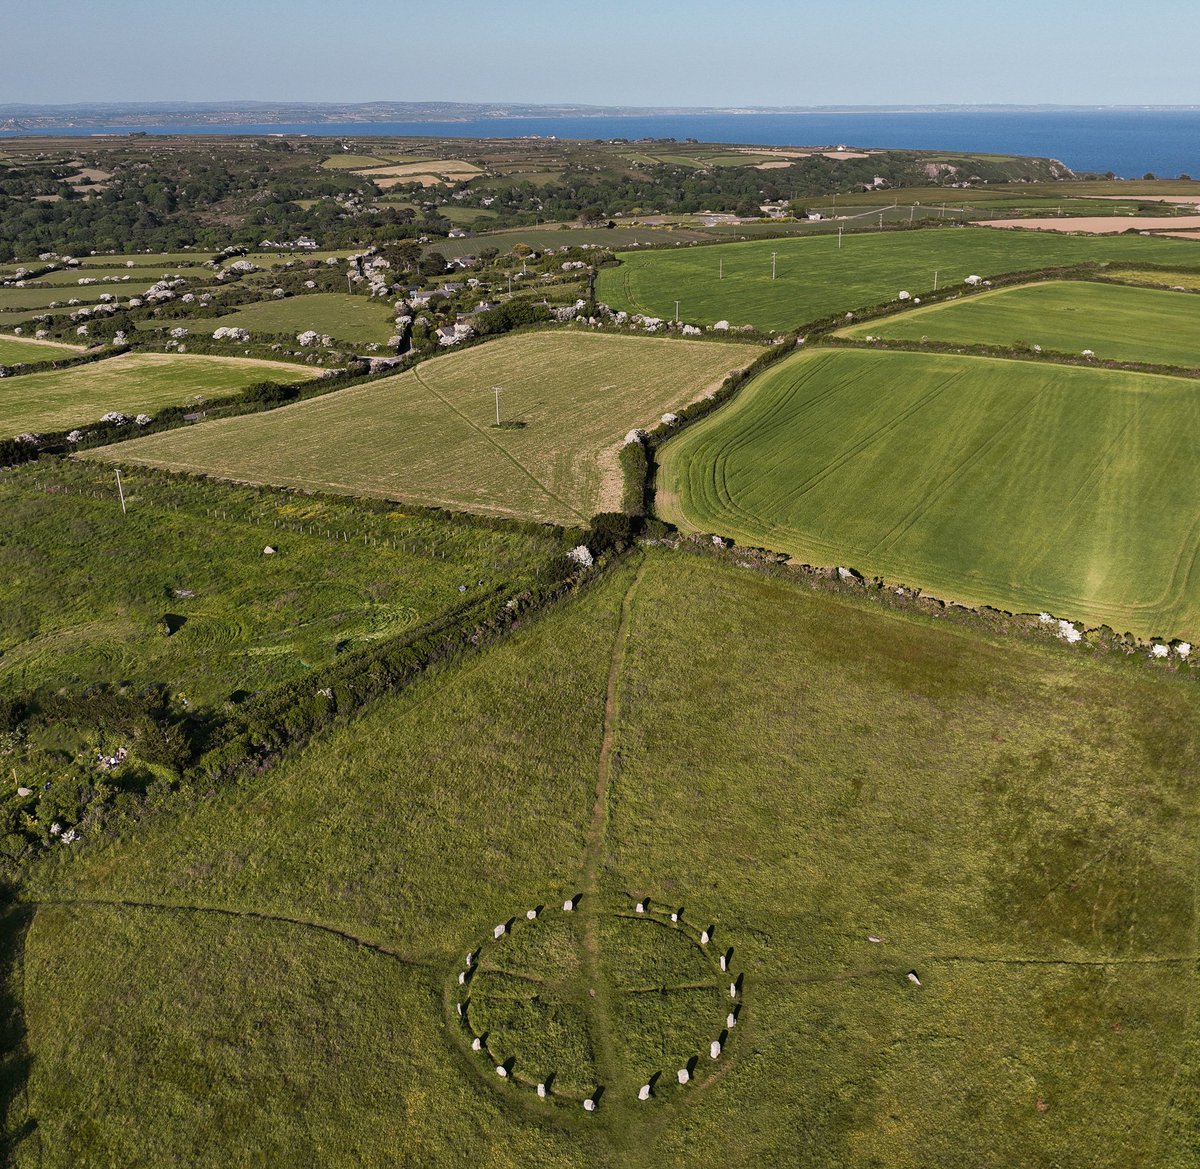 The merry maidens stone circle looking towards Penzance way #Cornwall #merrymaidens #neolithic #standingstonesunday